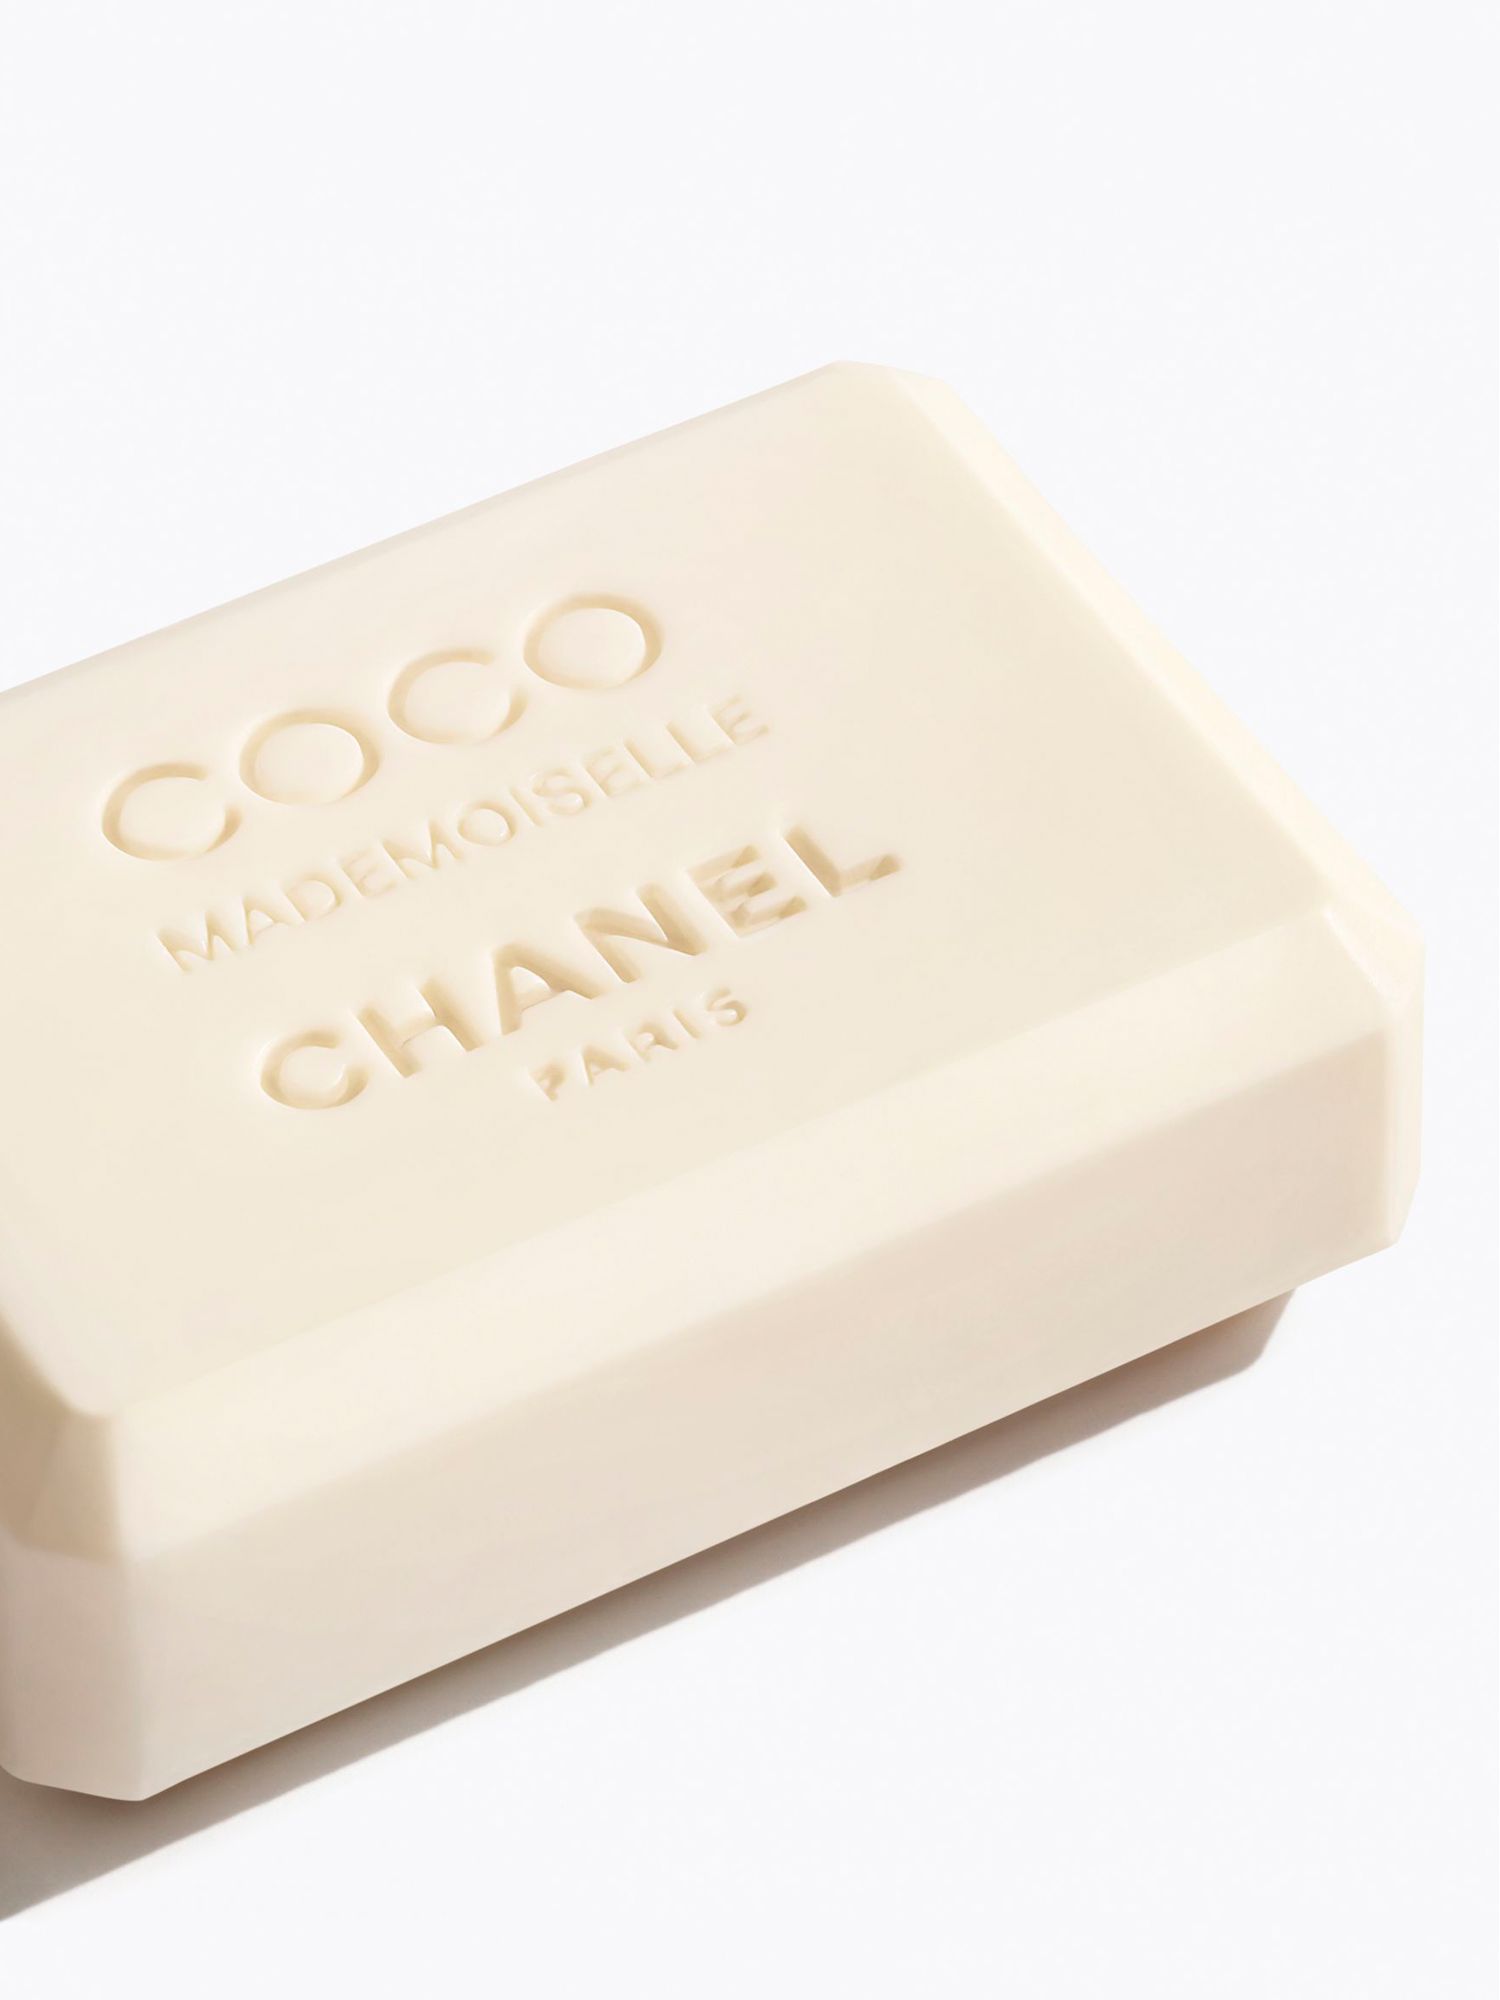 chanel coco mademoiselle bar soap